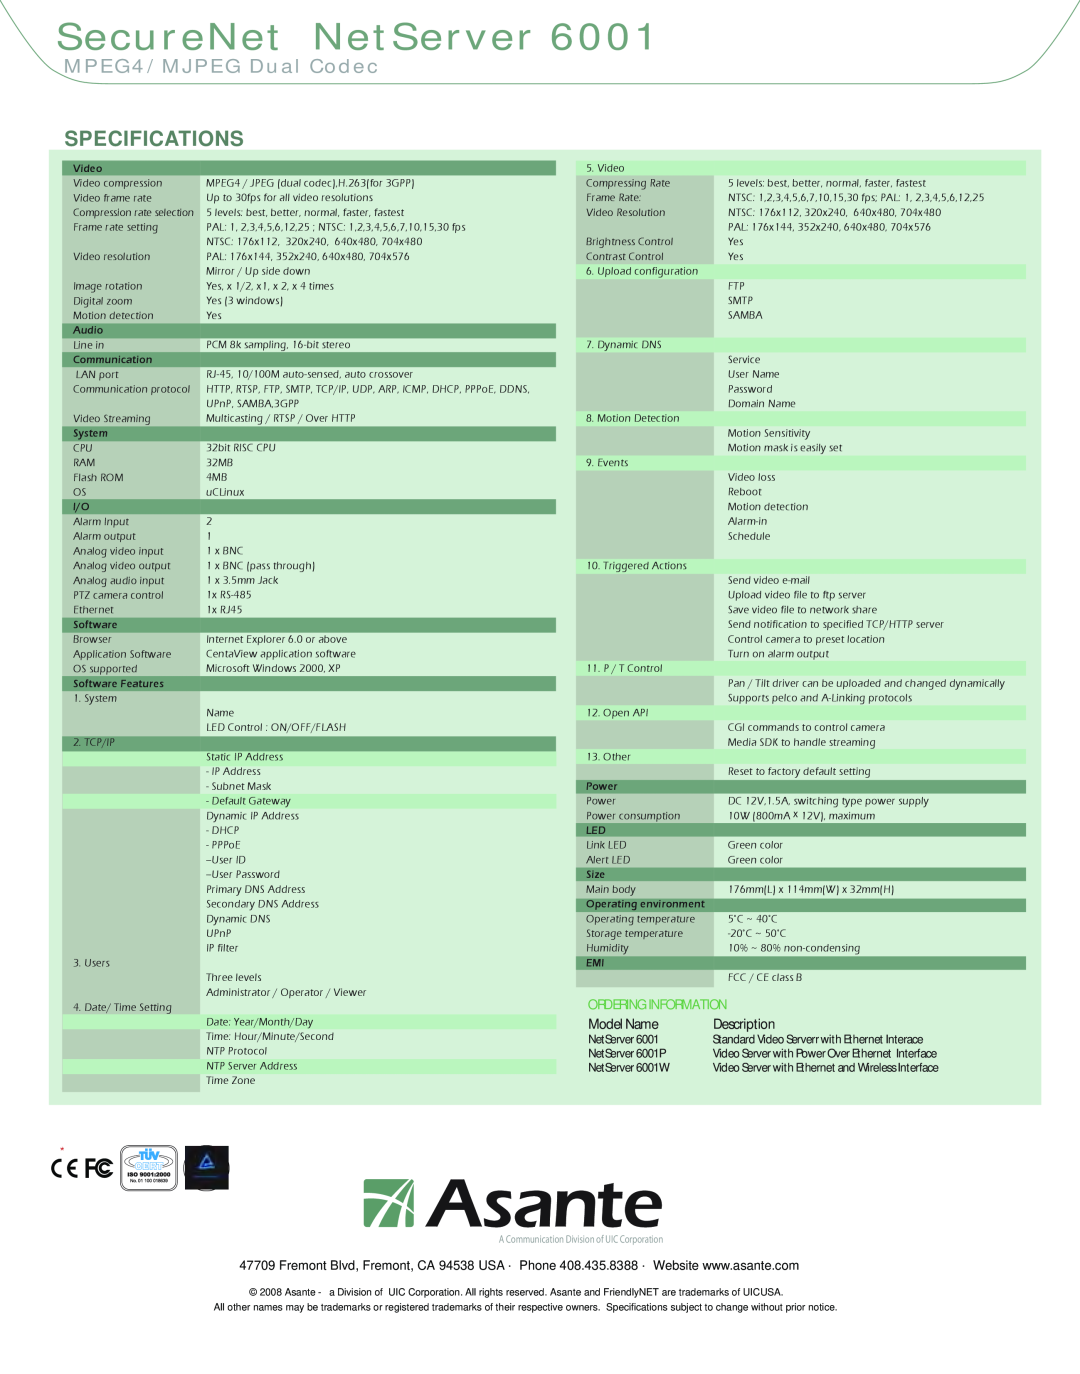 Asante Technologies SecureNet NetServerNetwork6001 Camera, Specifications, MPEG4/MJPEG Dual Codec, Ordering Information 